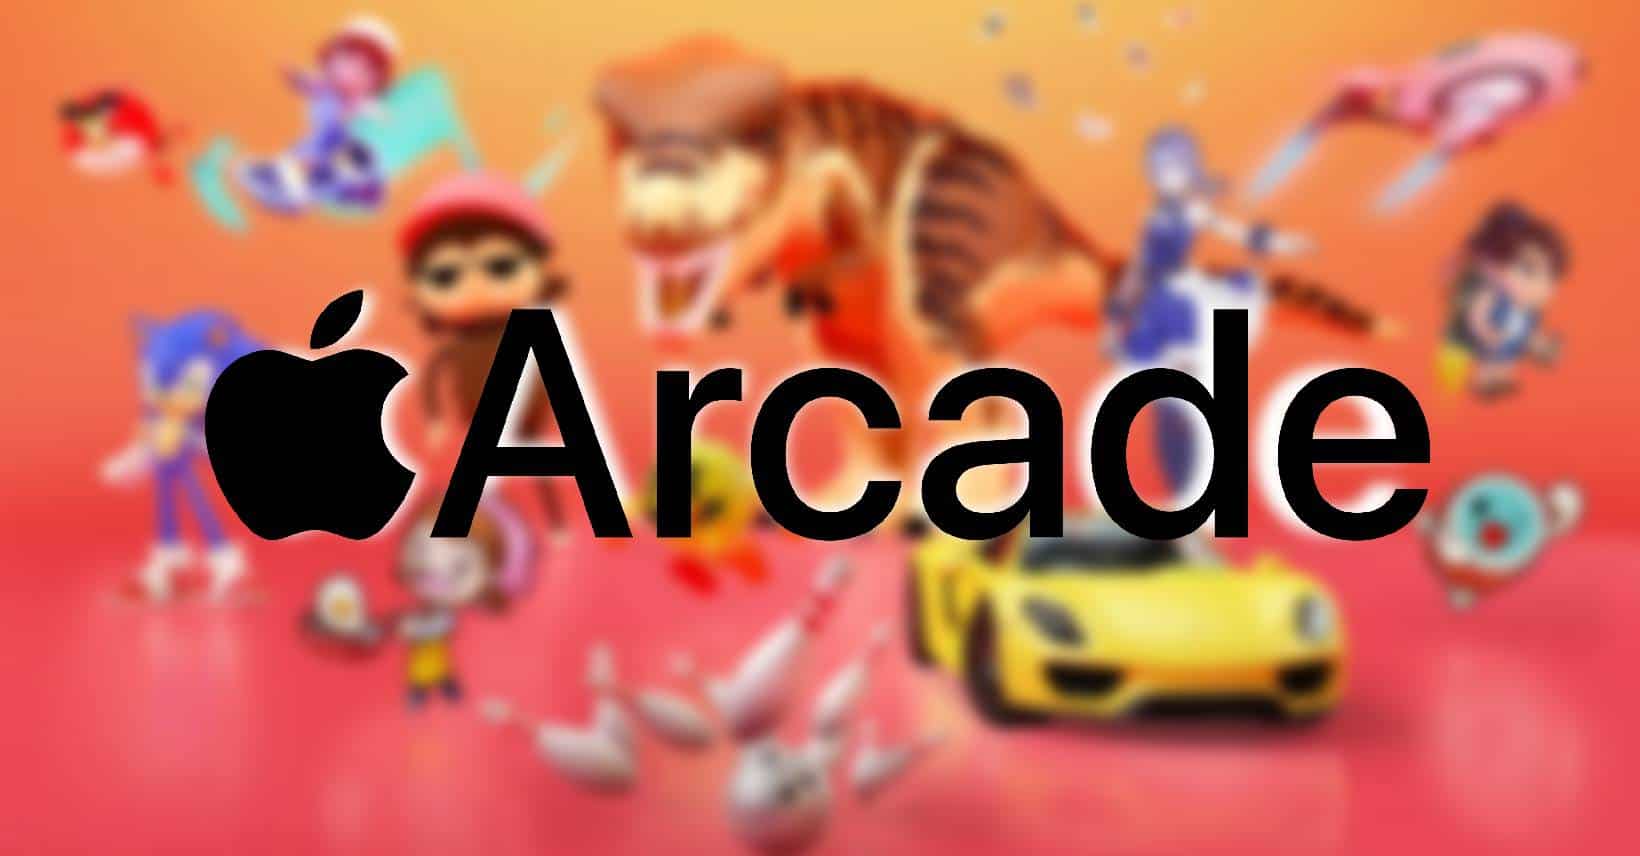 The Apple Arcade logo is displayed on a vibrant orange background.